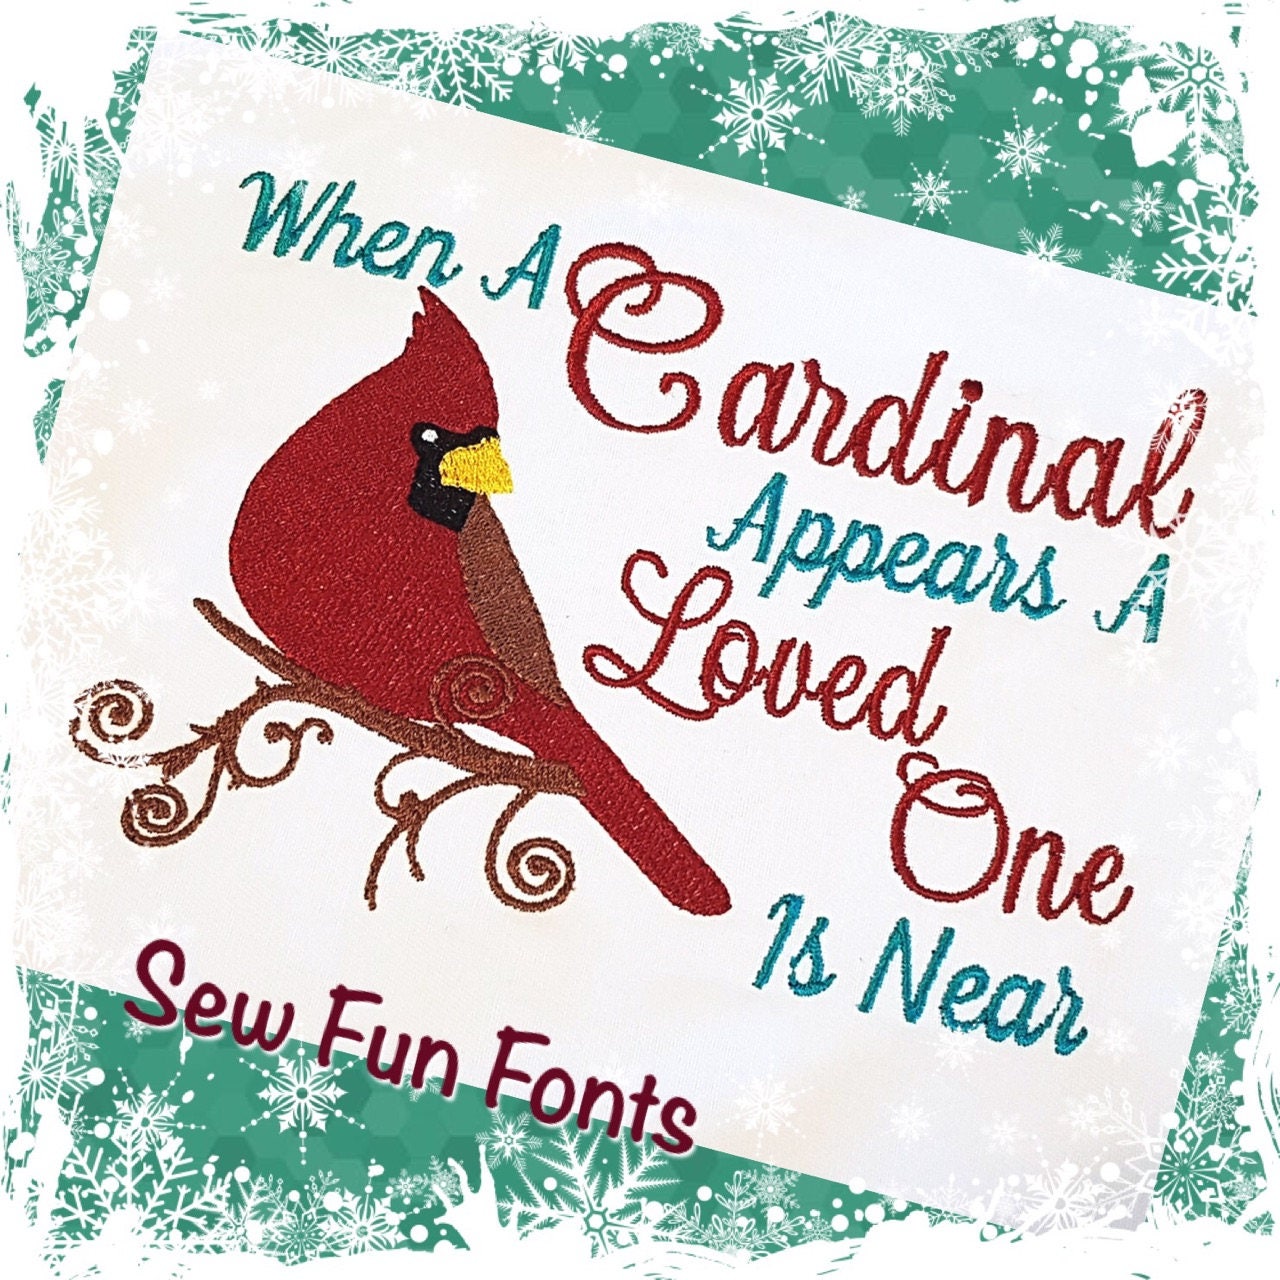 St. Louis Cardinals Word Art With Color Coordinating 11x14 Mat